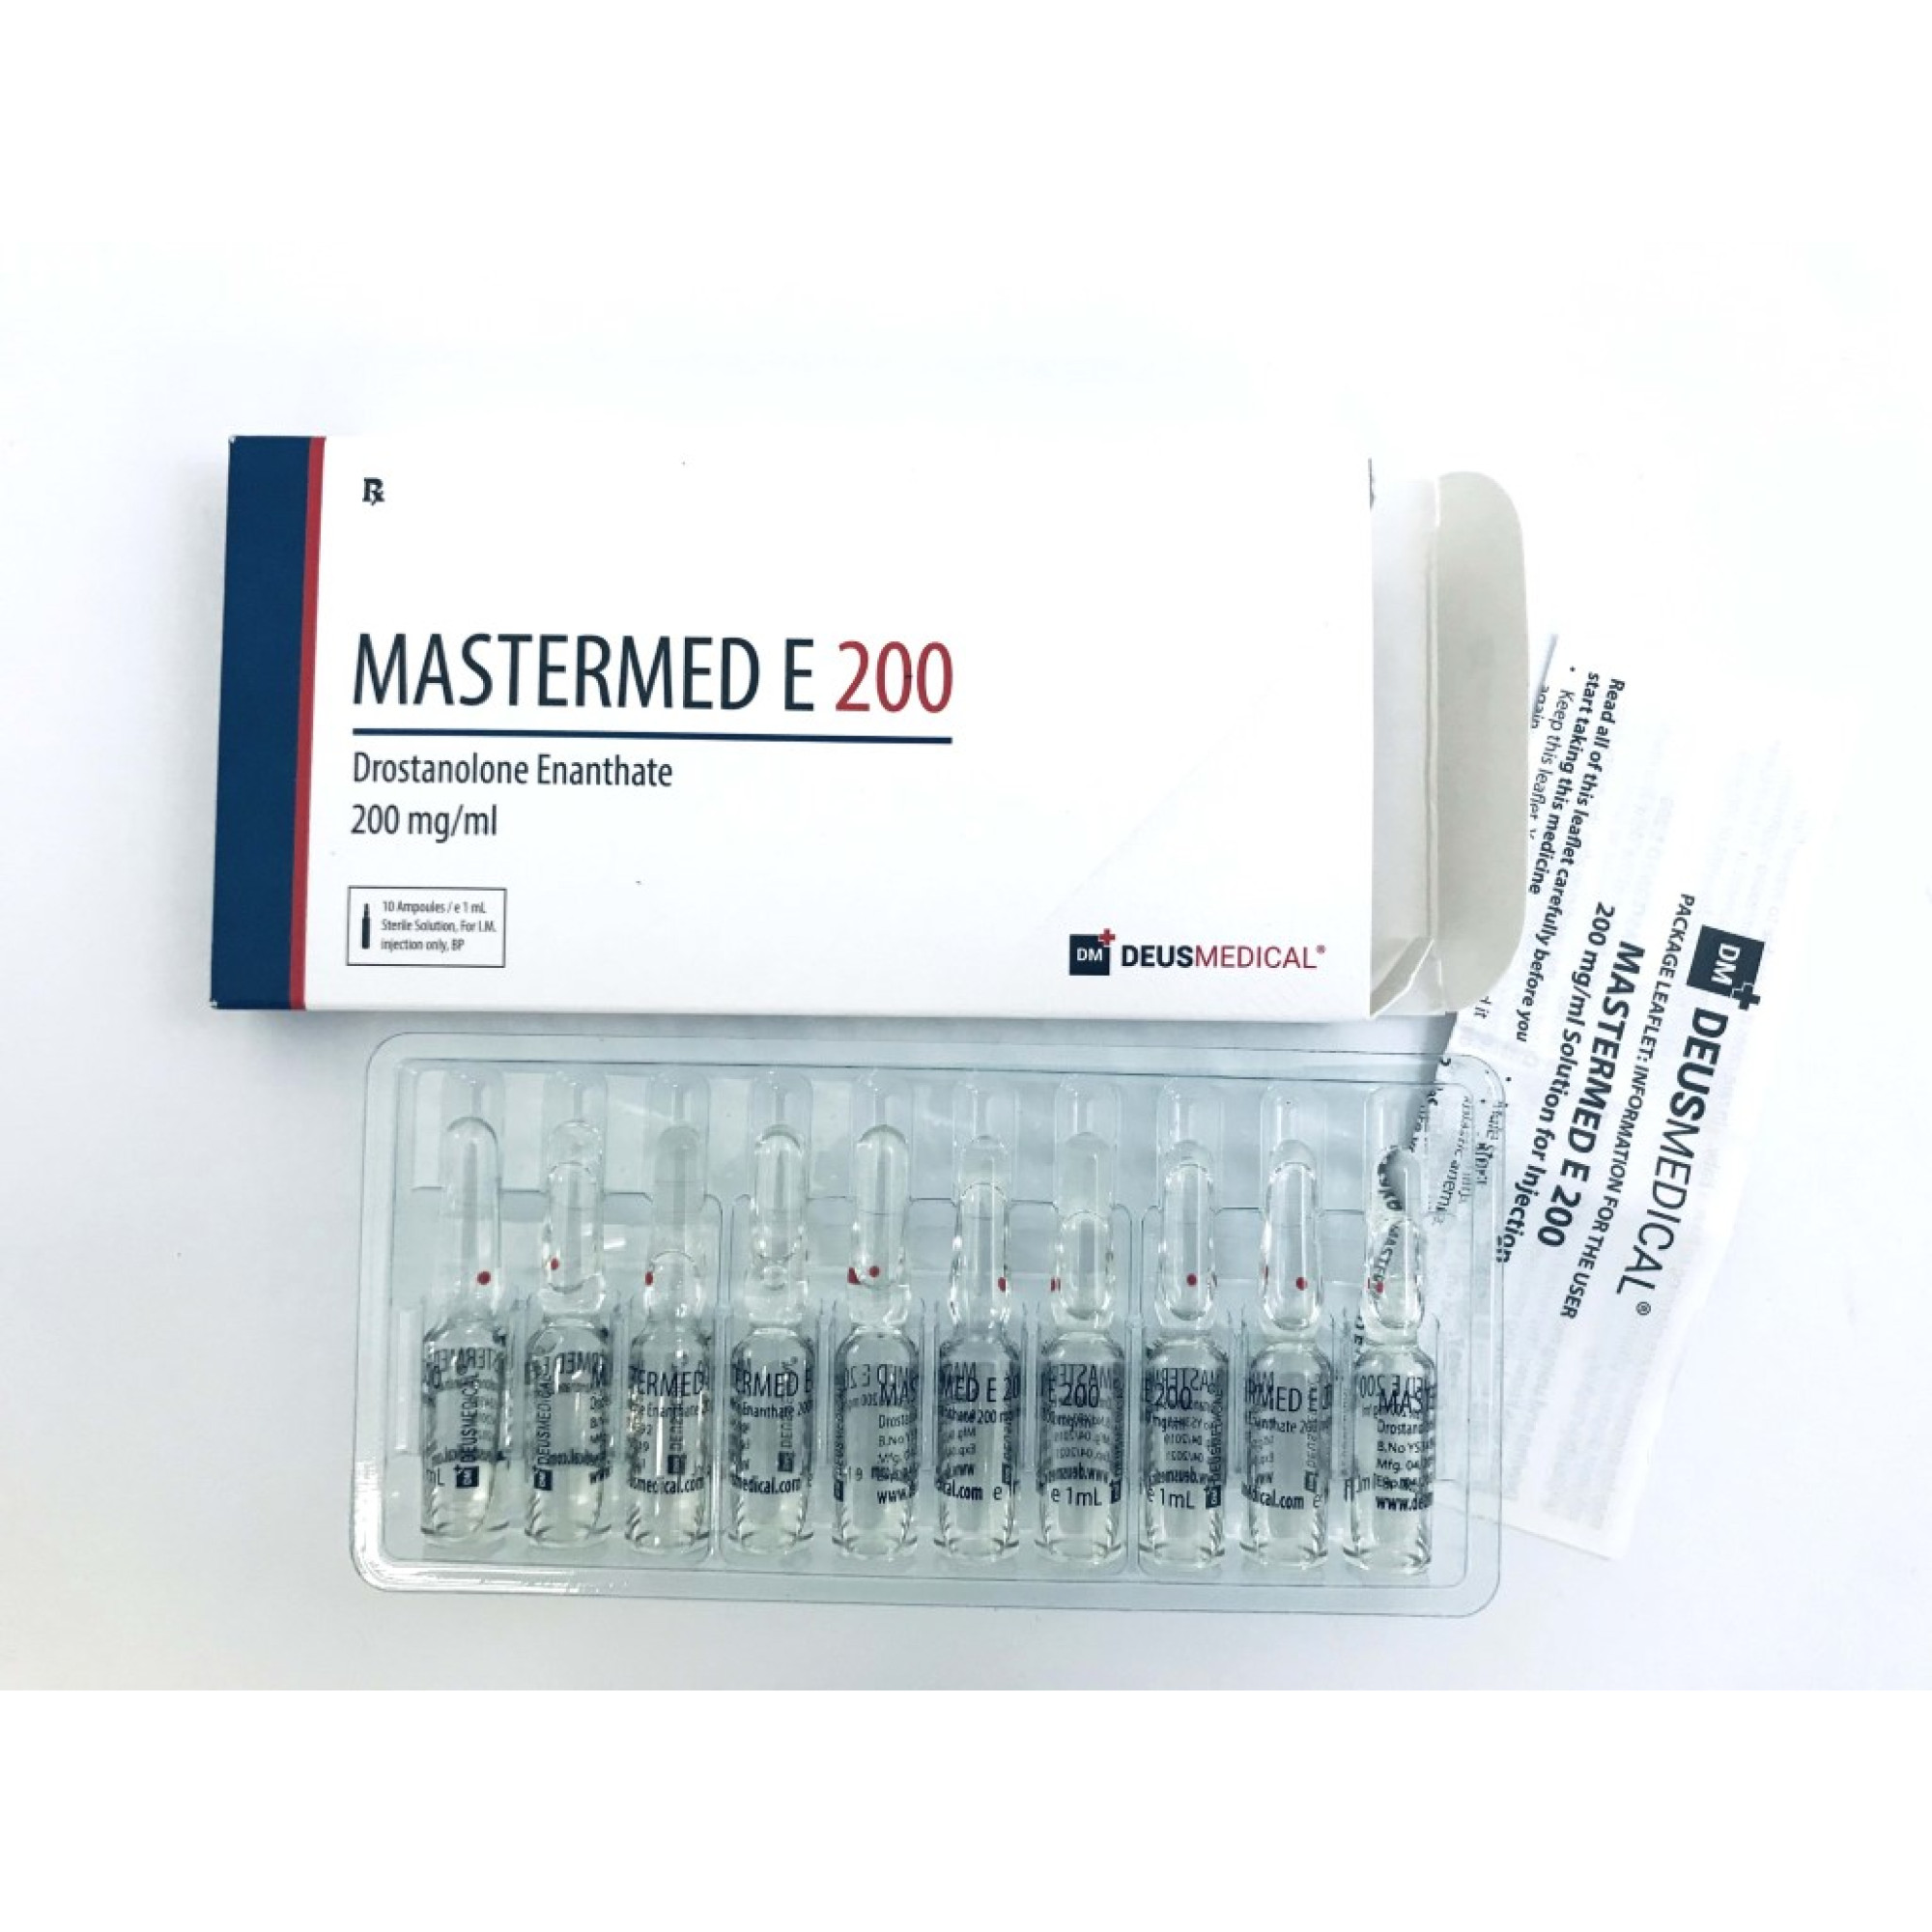 MASTERMED E 200 (Drostanolone Enanthate), DEUS MEDICAL, BUY STEROIDS ONLINE - www.DEUSPOWER.com